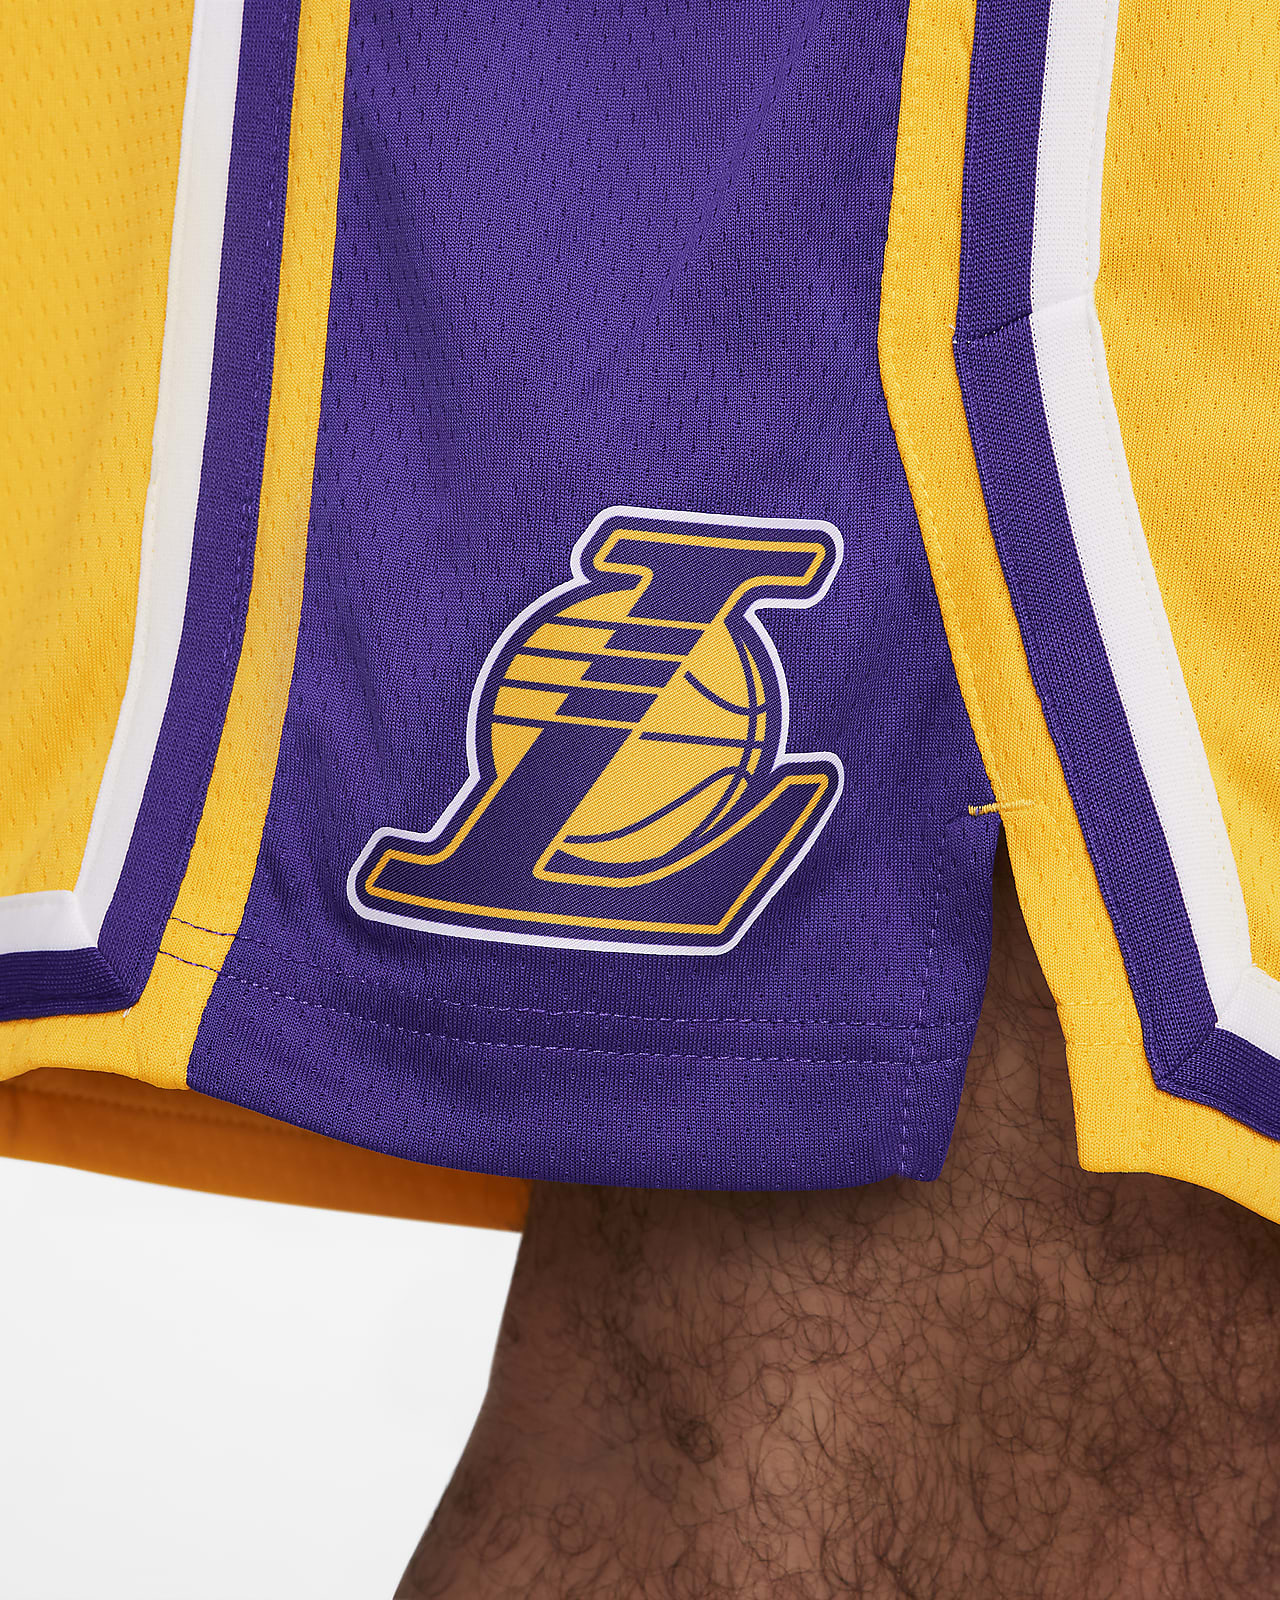 Nike Replica Jersey & Short Set Lakers